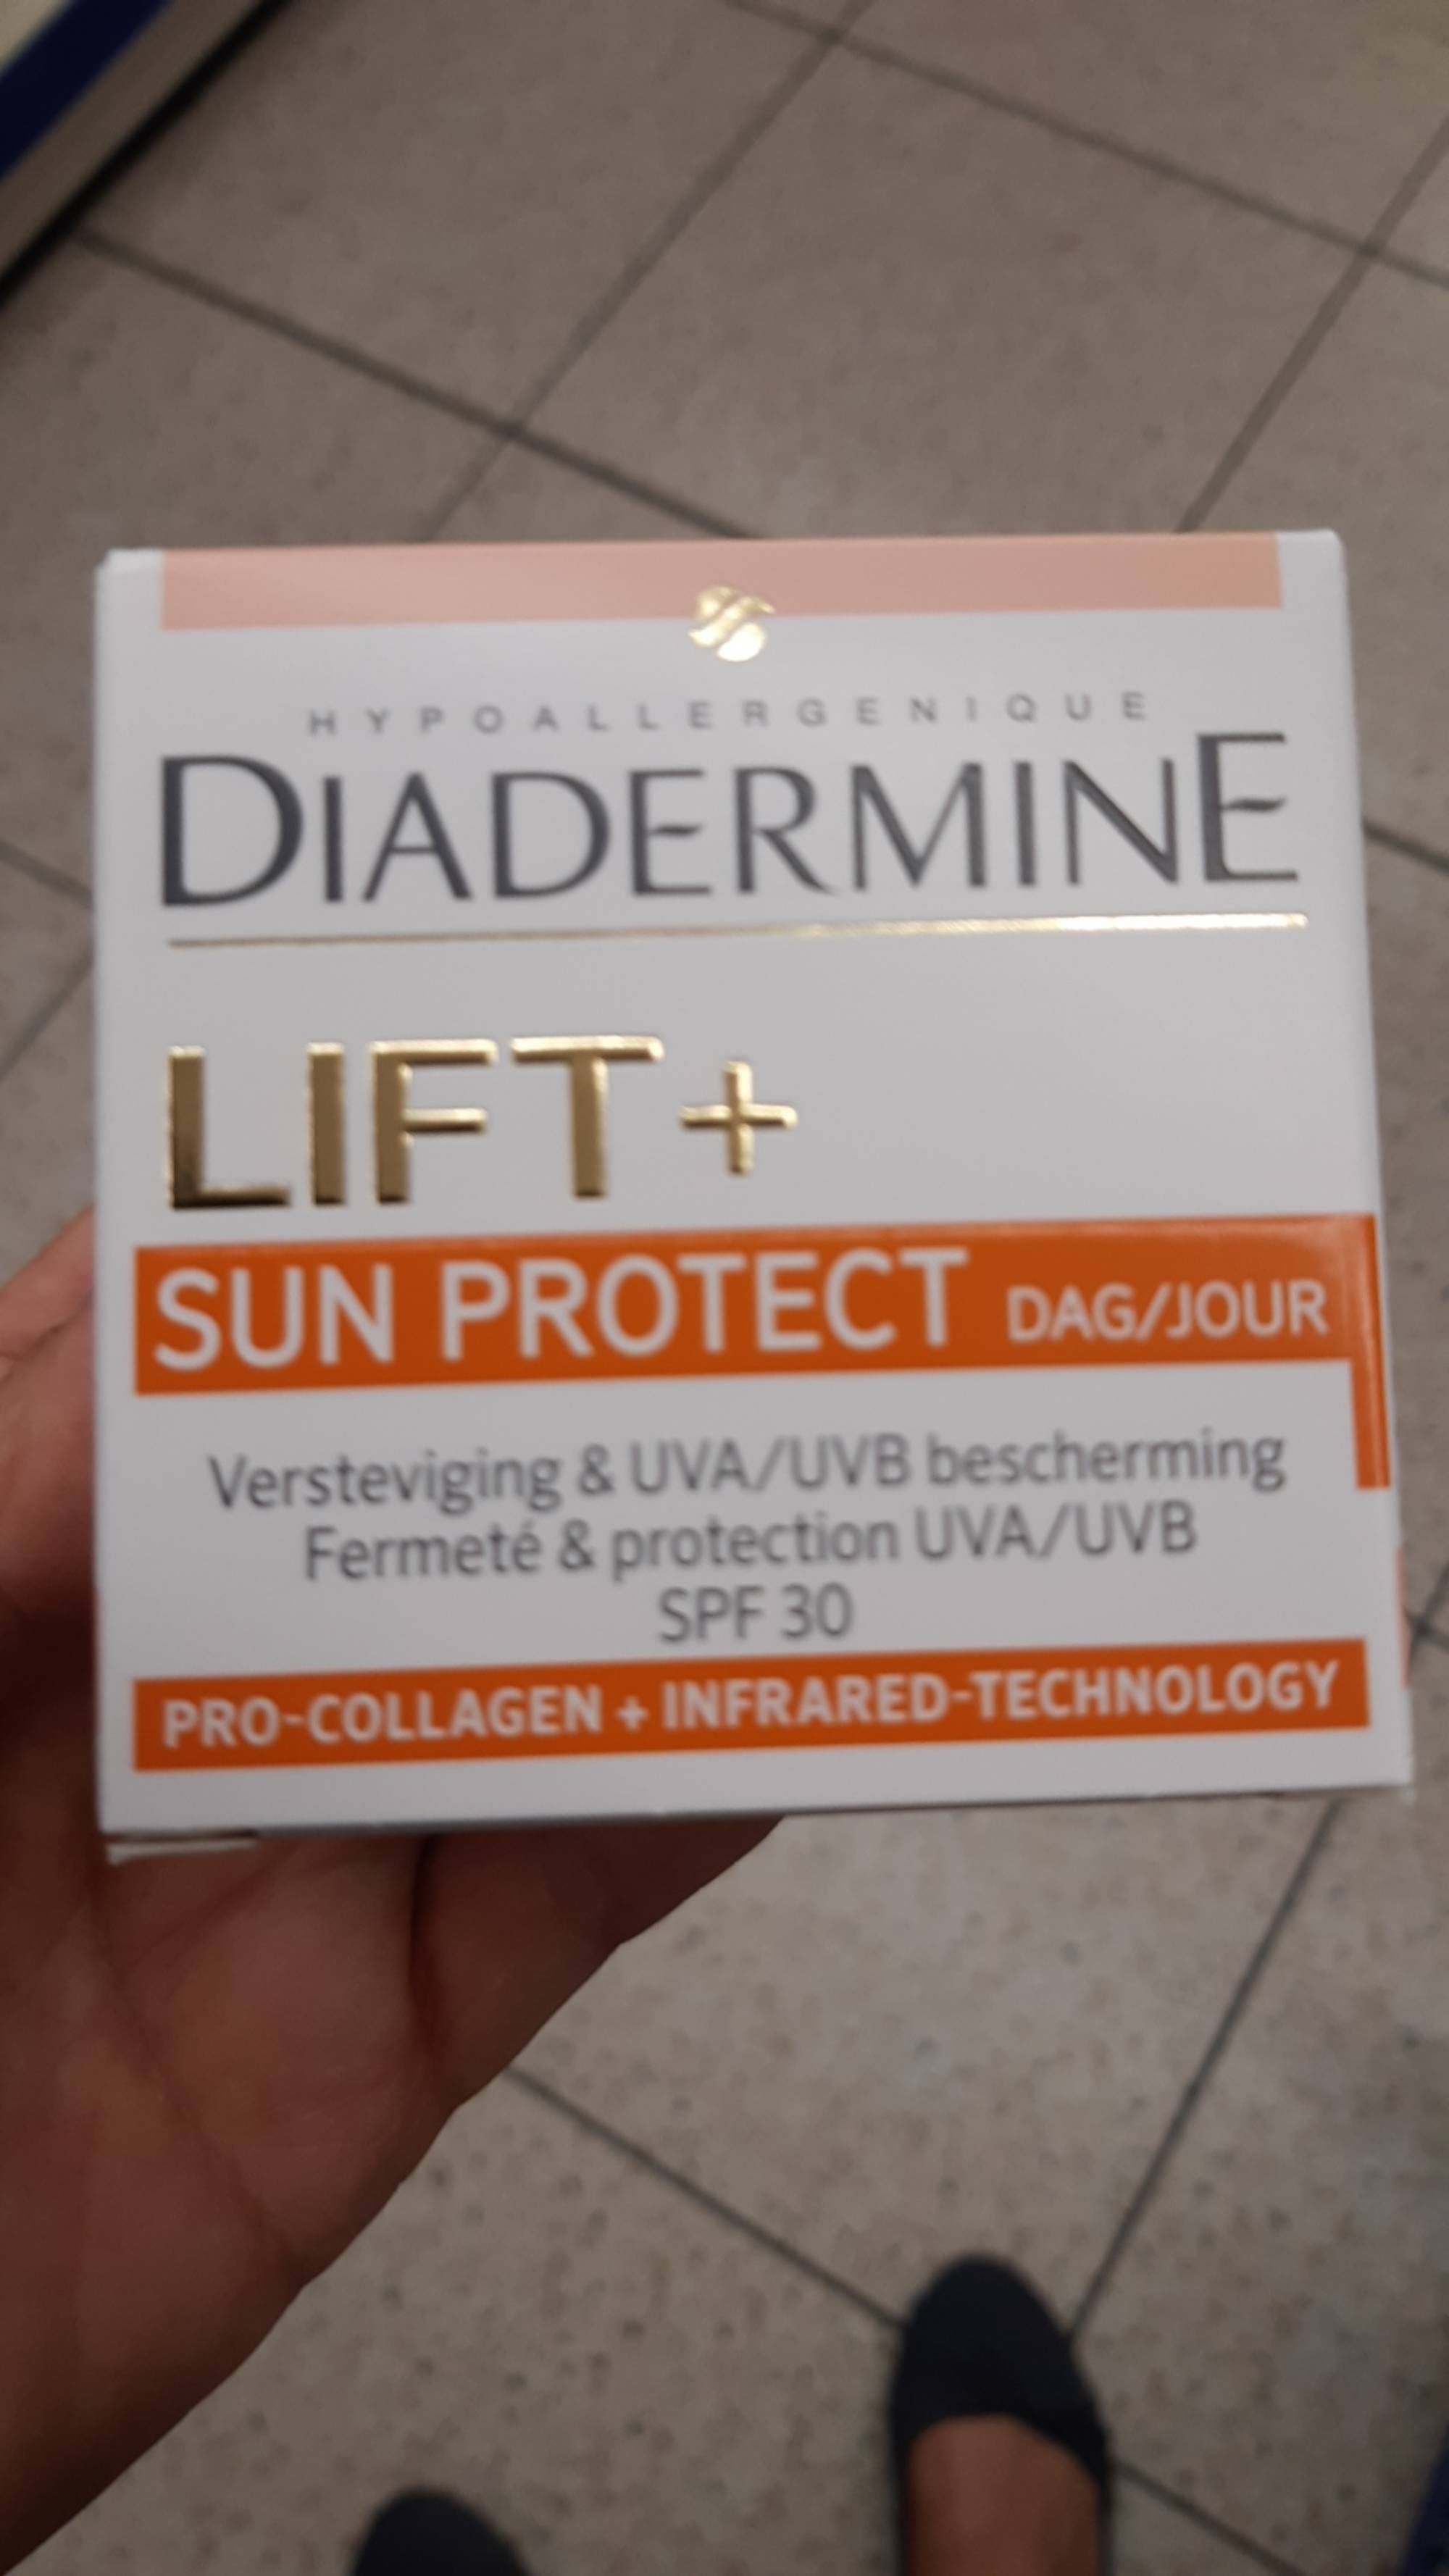 DIADERMINE - Lift+ - Sun protect SPF 30